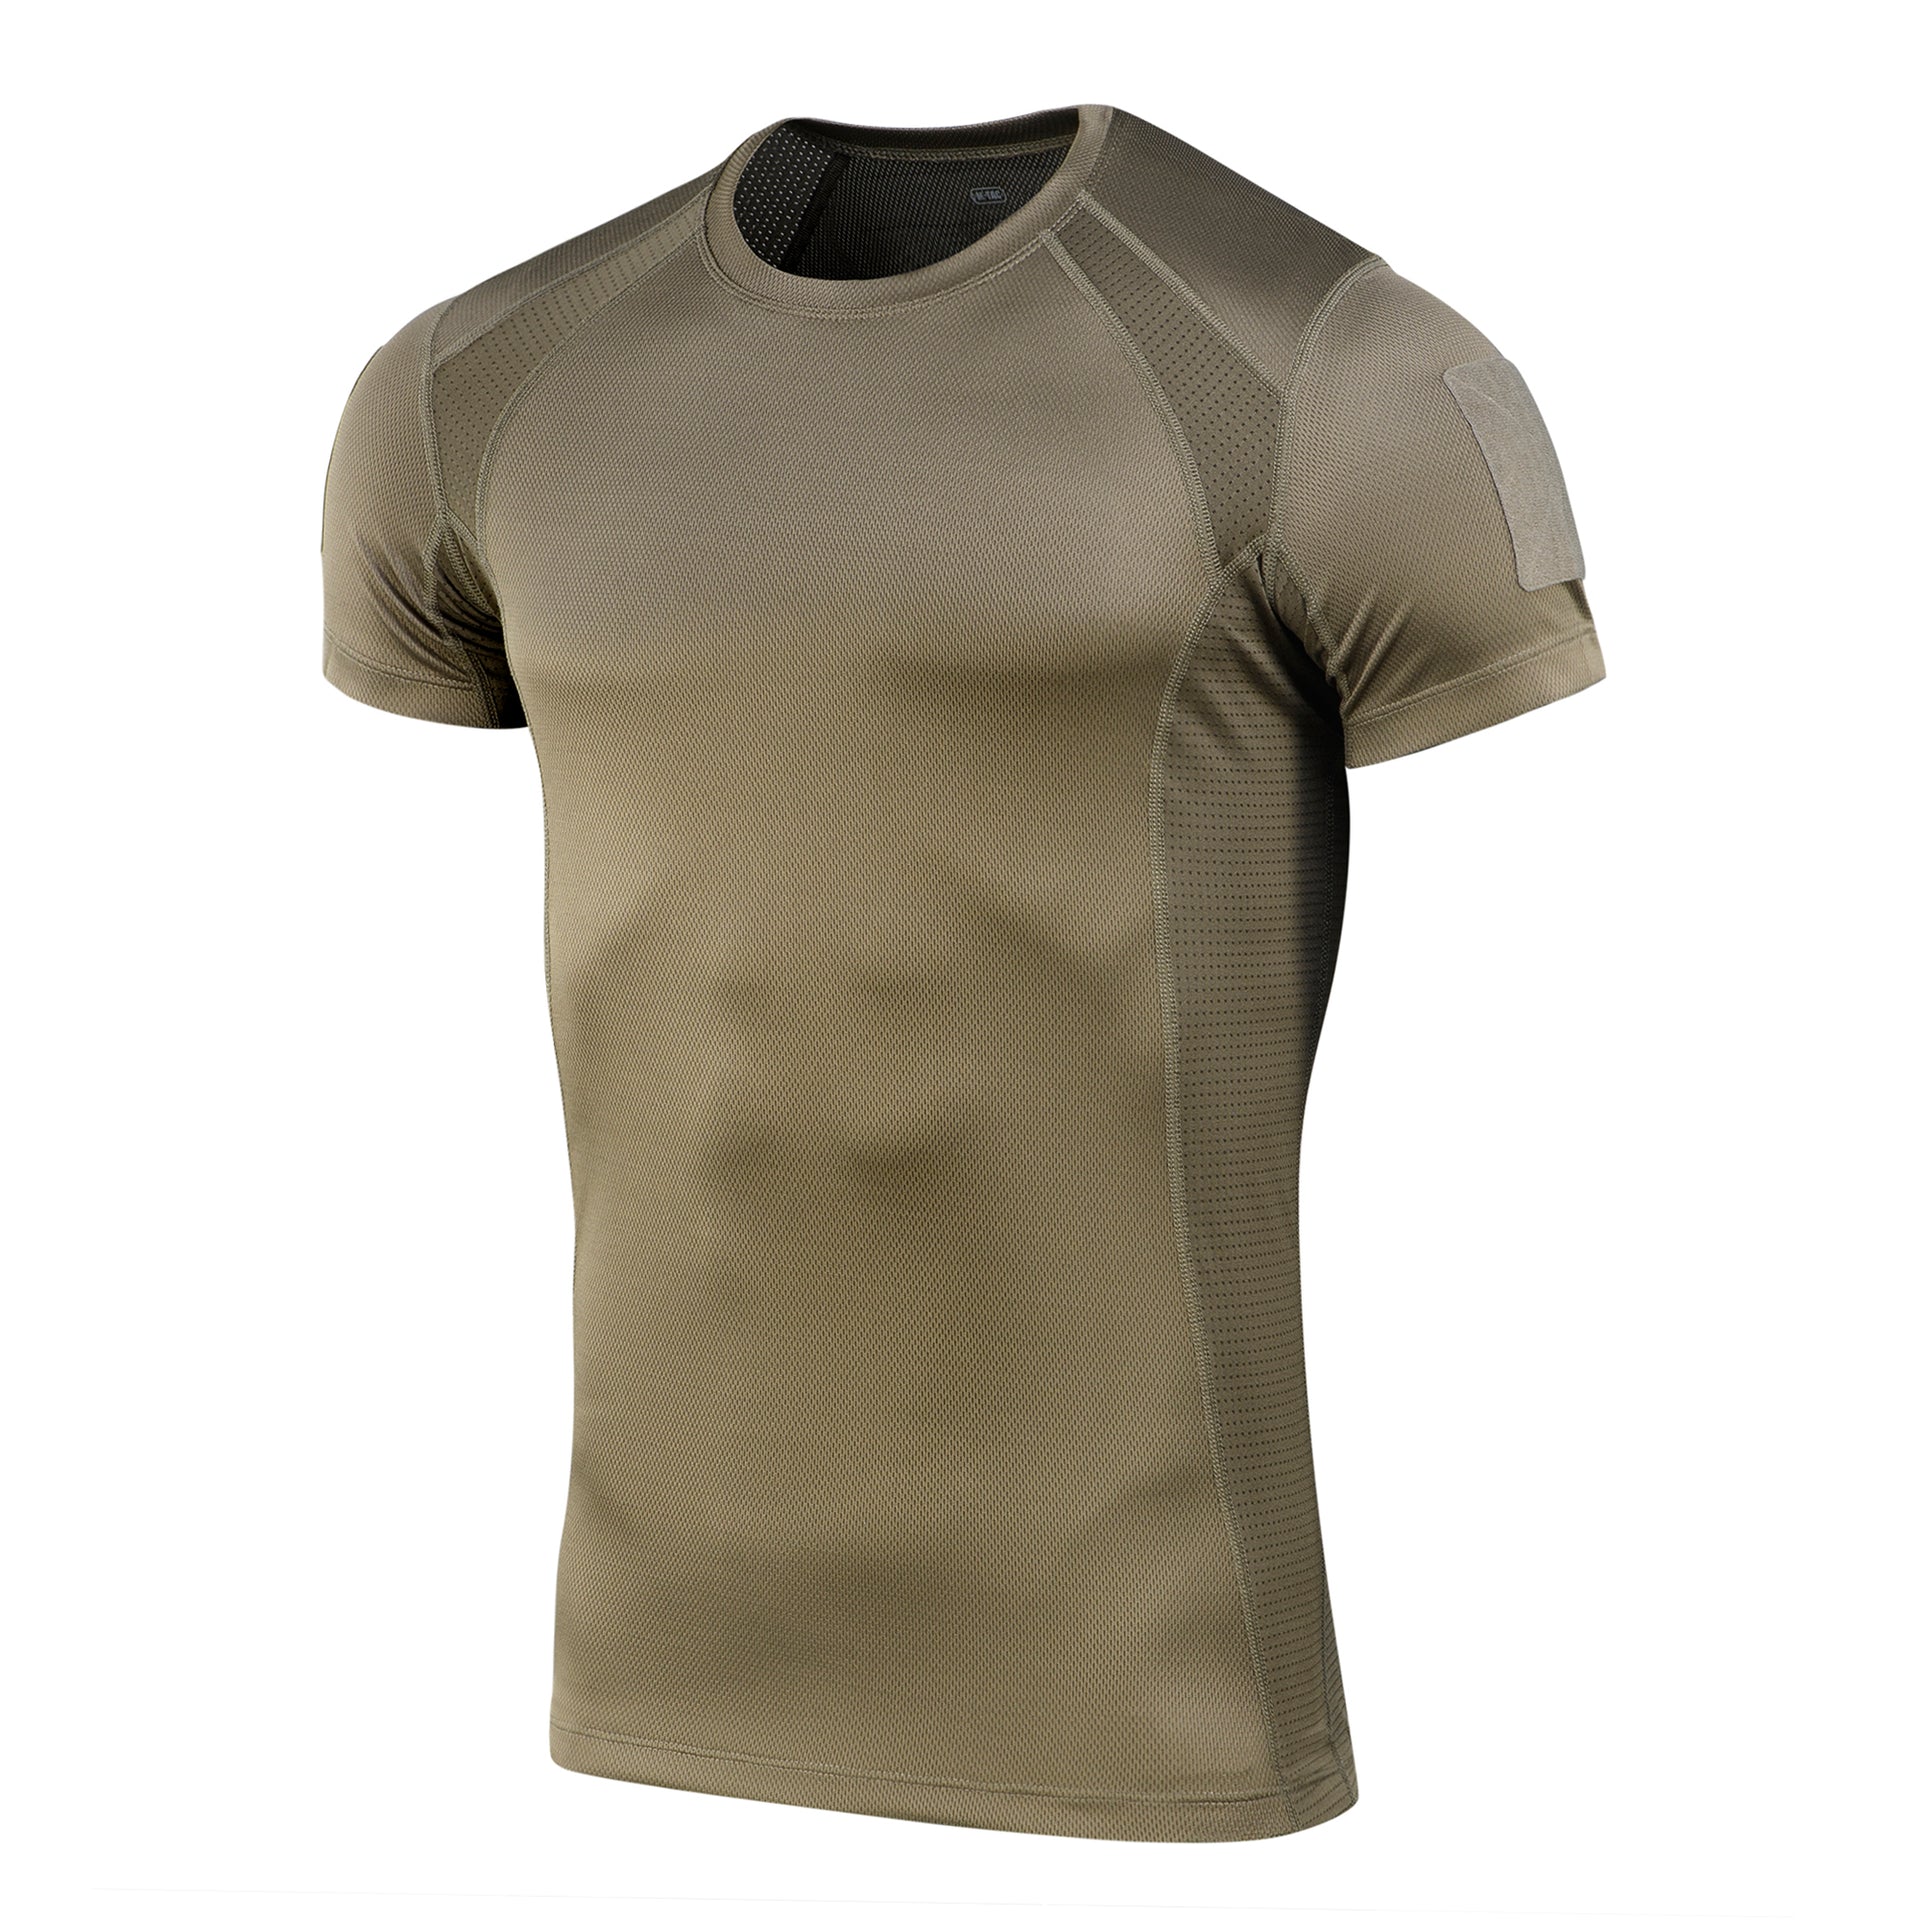 M-Tac T-Shirt Athletic Tactical gen 2